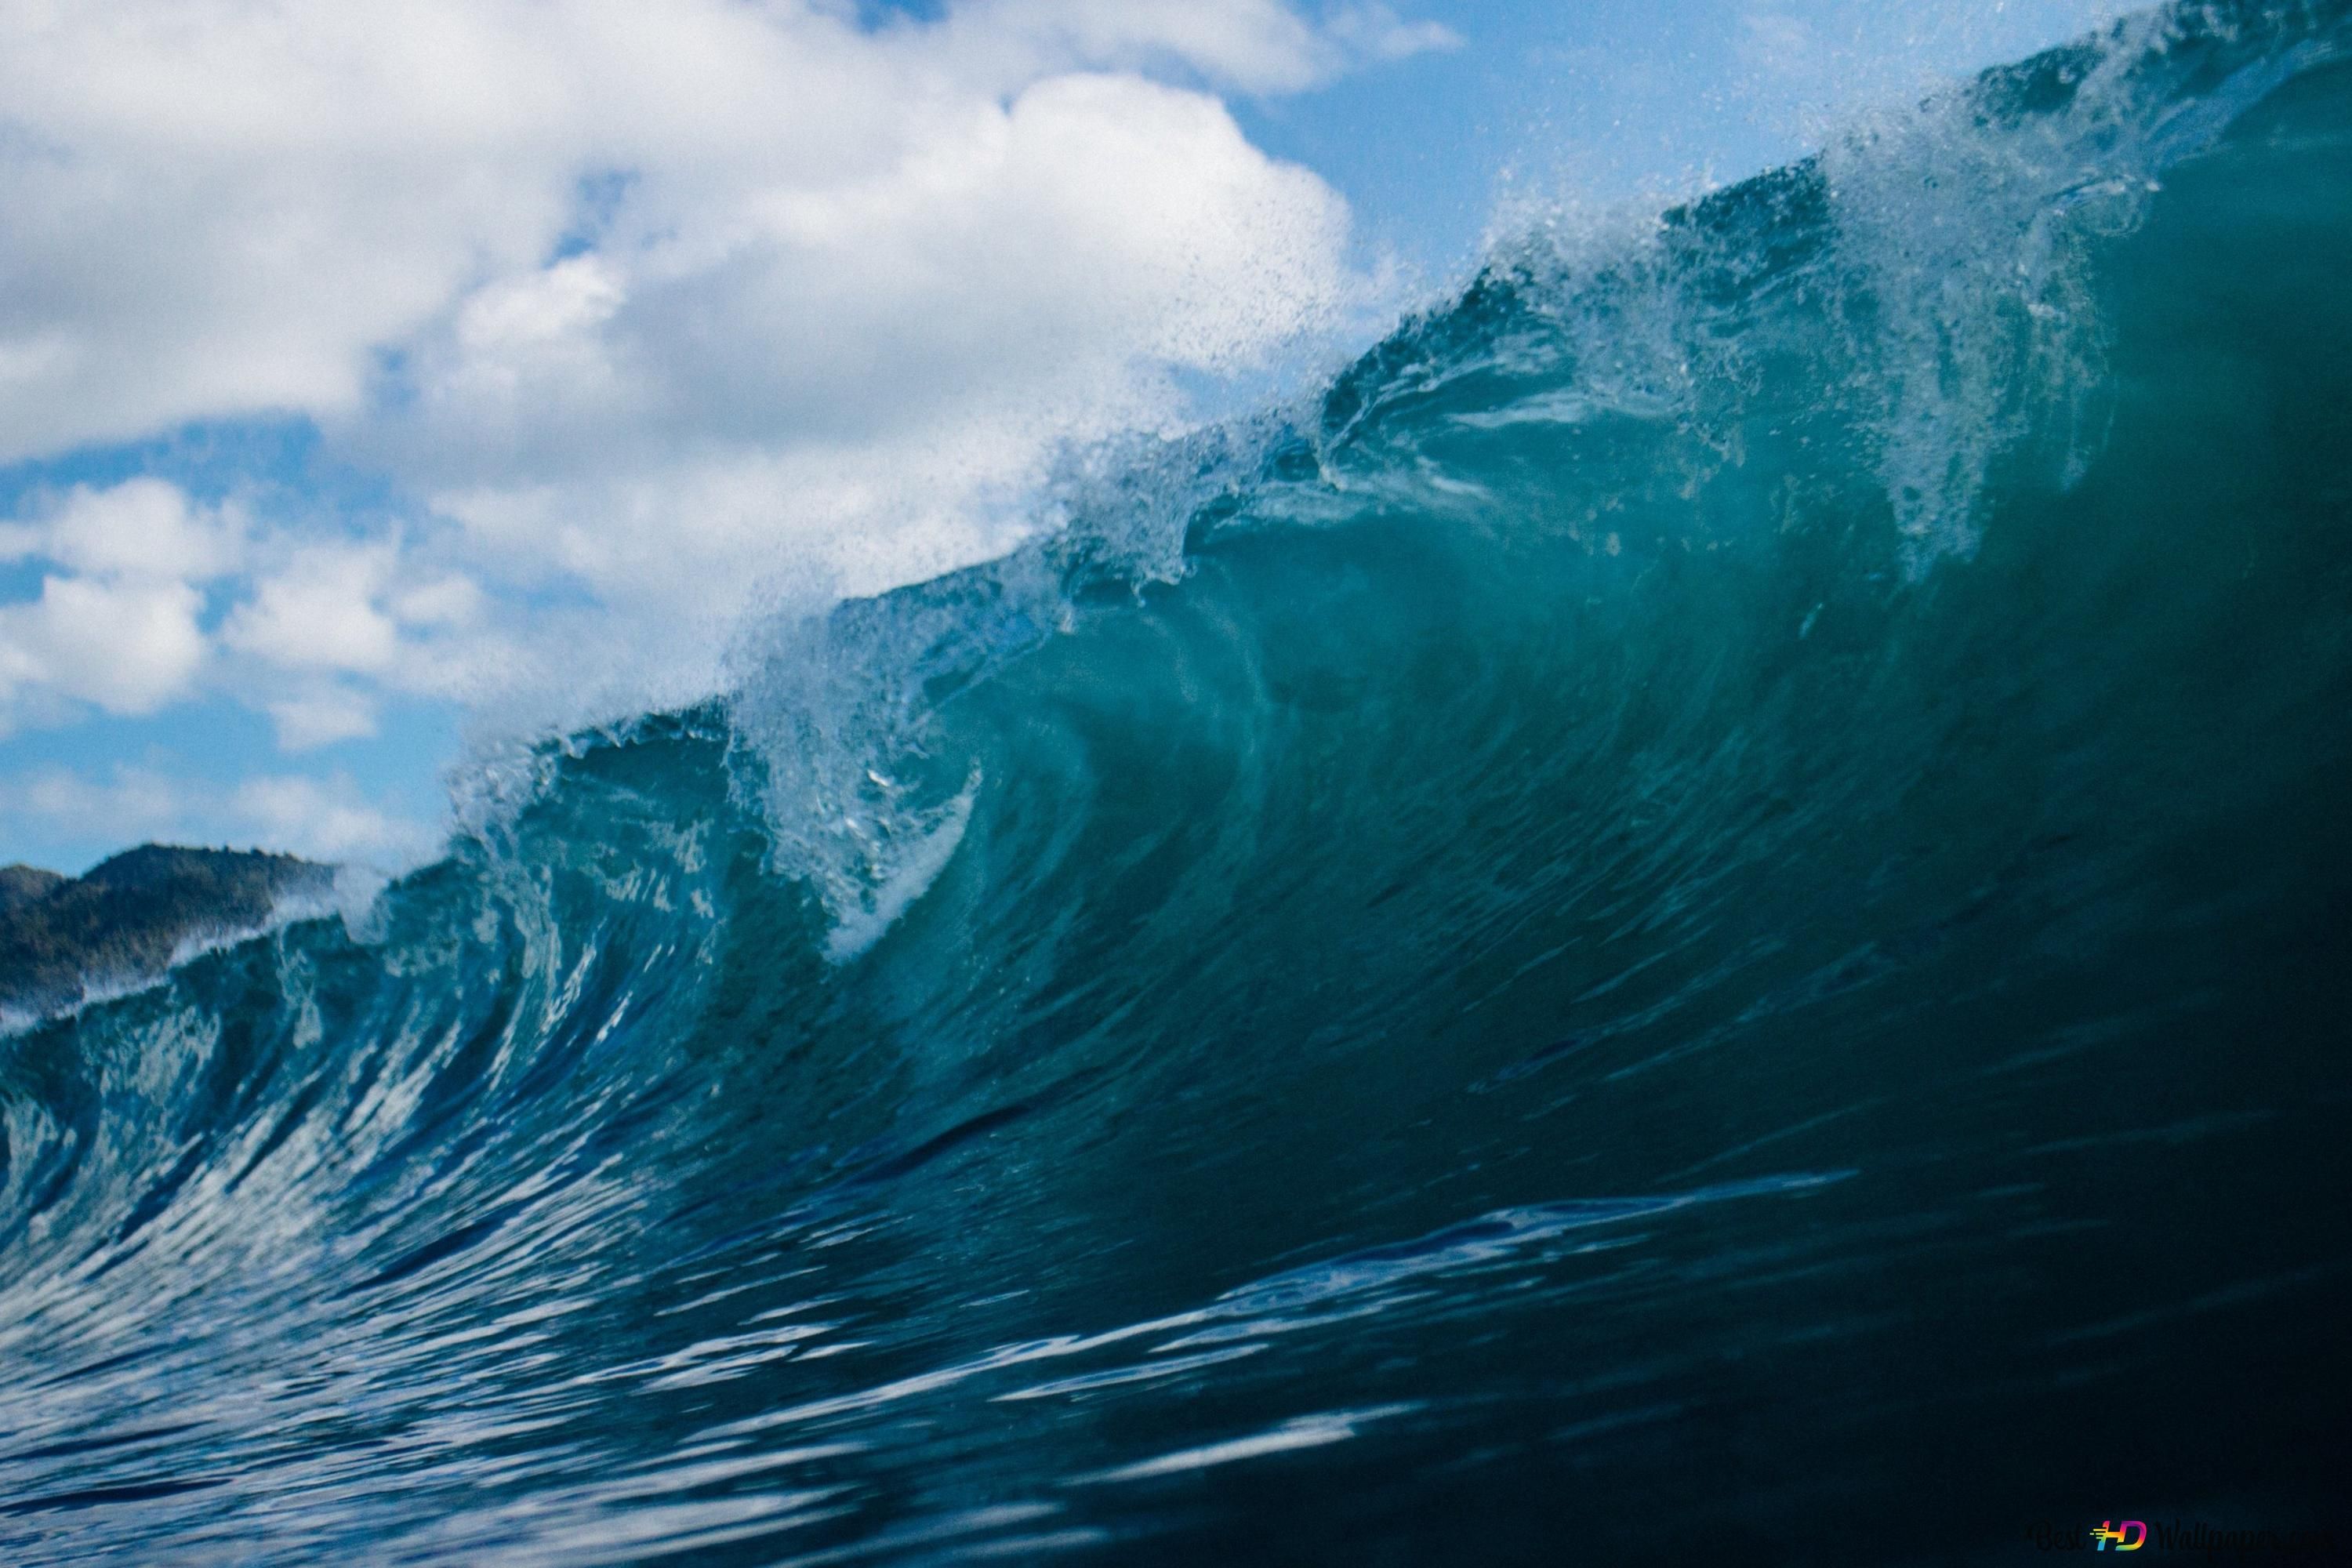 A large wave in the ocean - Ocean